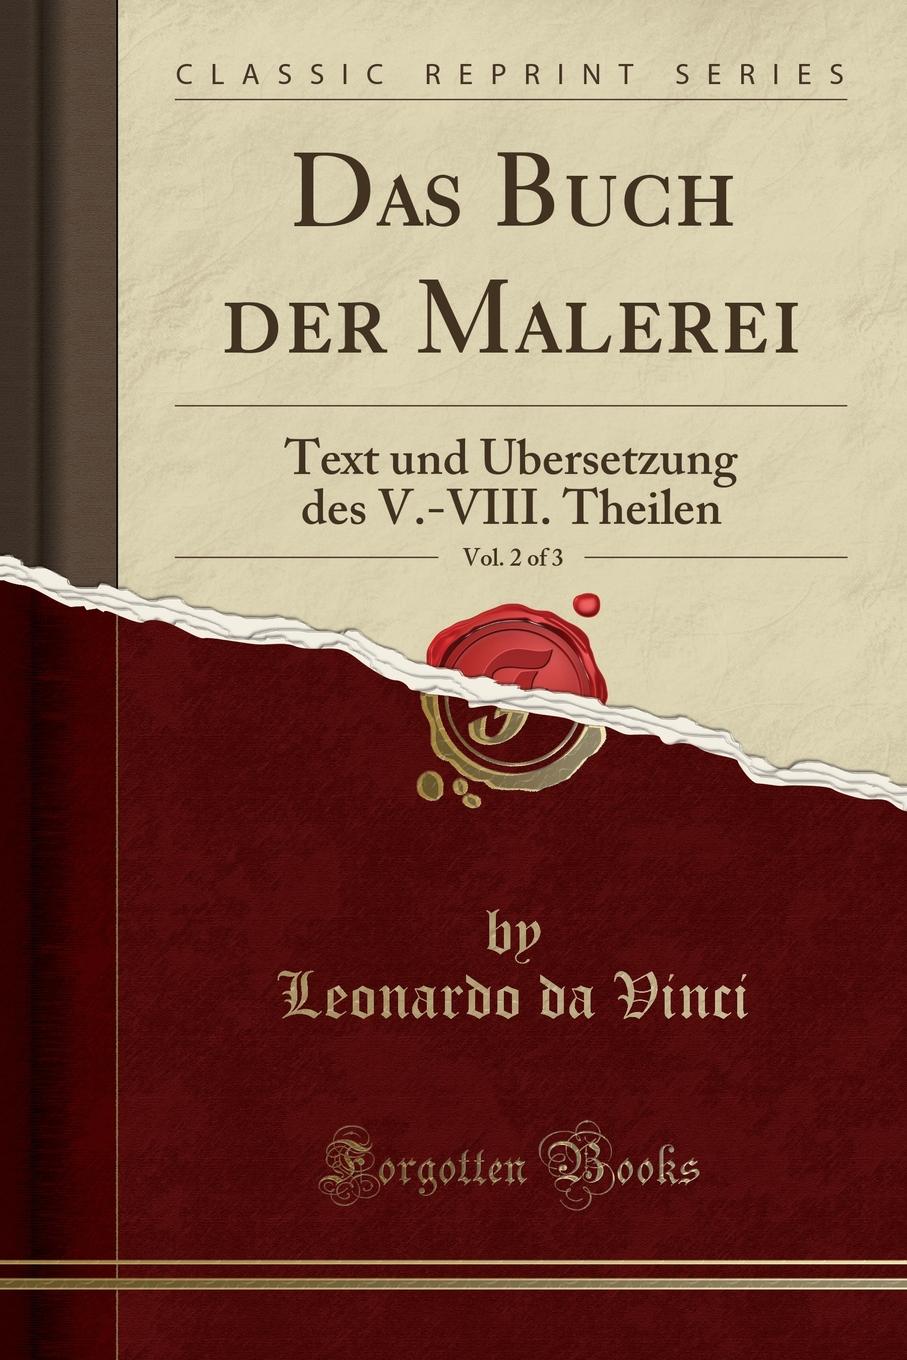 Das Buch der Malerei, Vol. 2 of 3. Text und Ubersetzung des V.-VIII. Theilen (Classic Reprint)